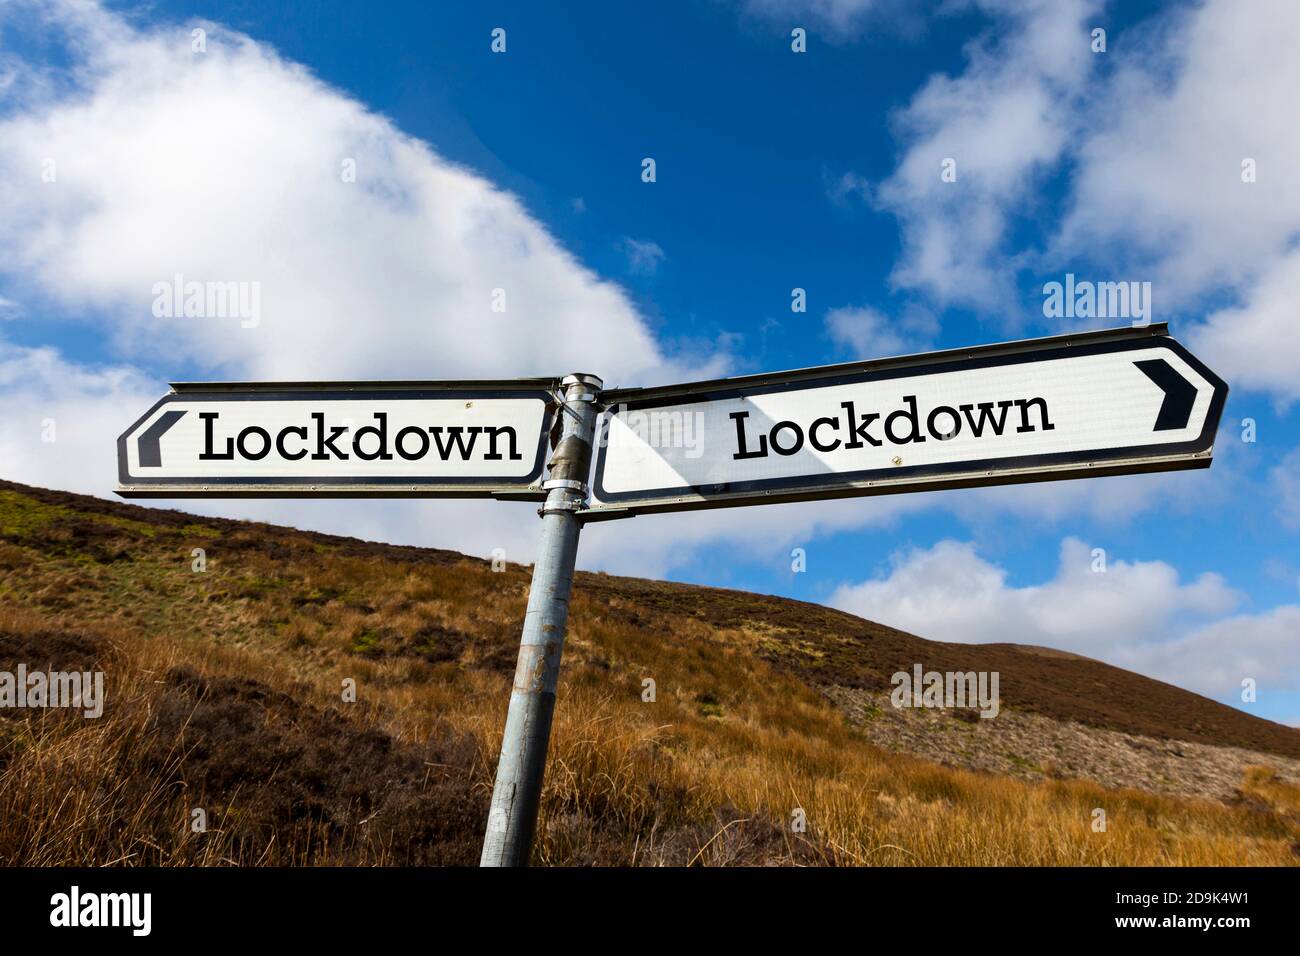 Lockdown, lock down, Covid 19 lockdown, UK lockdown, sign, lockdown sign, coronavirus lockdown, covid19, covid 19, UK, England, Europe, Stock Photo